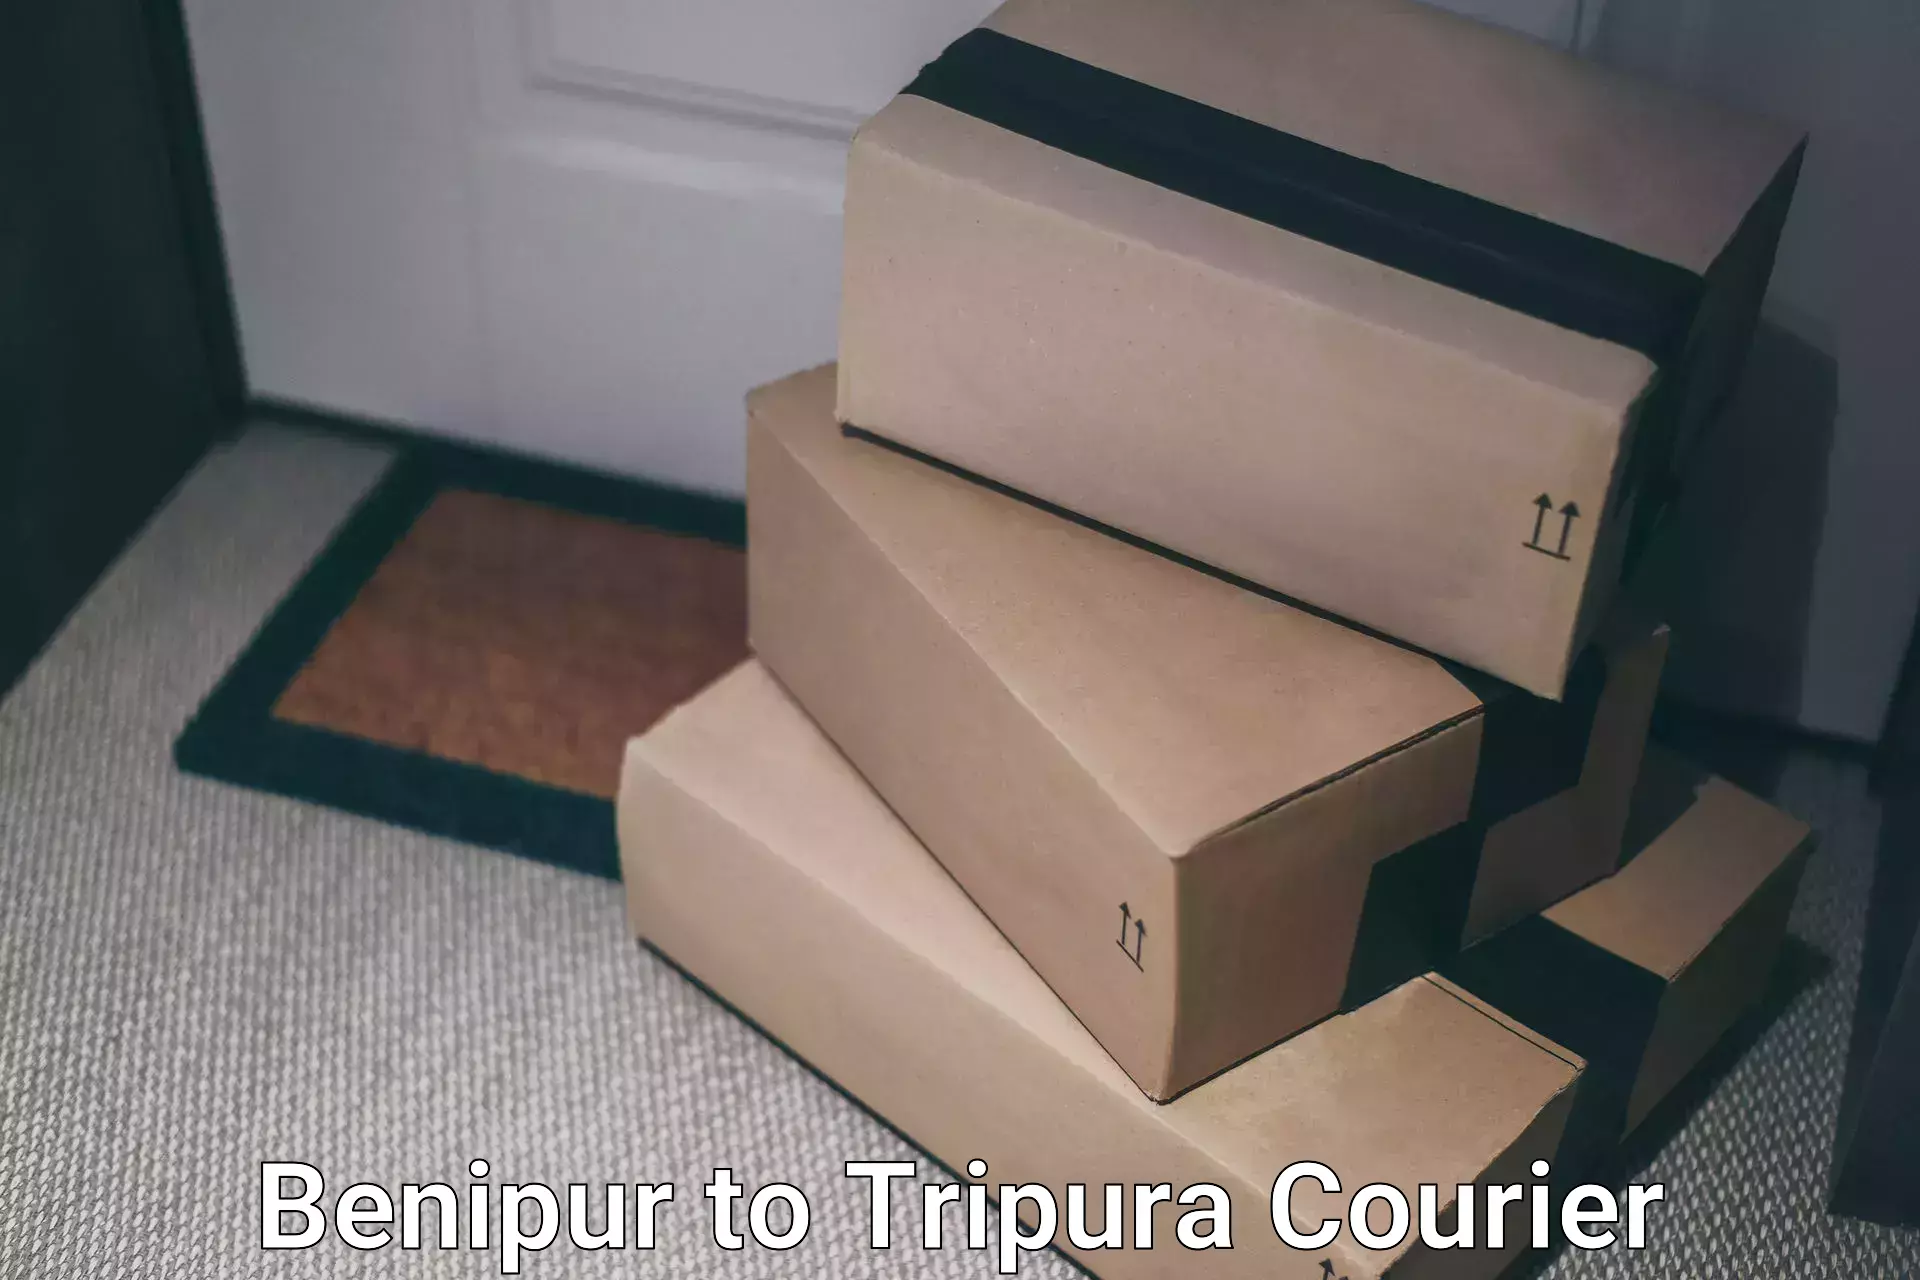 Bulk shipping discounts Benipur to Udaipur Tripura